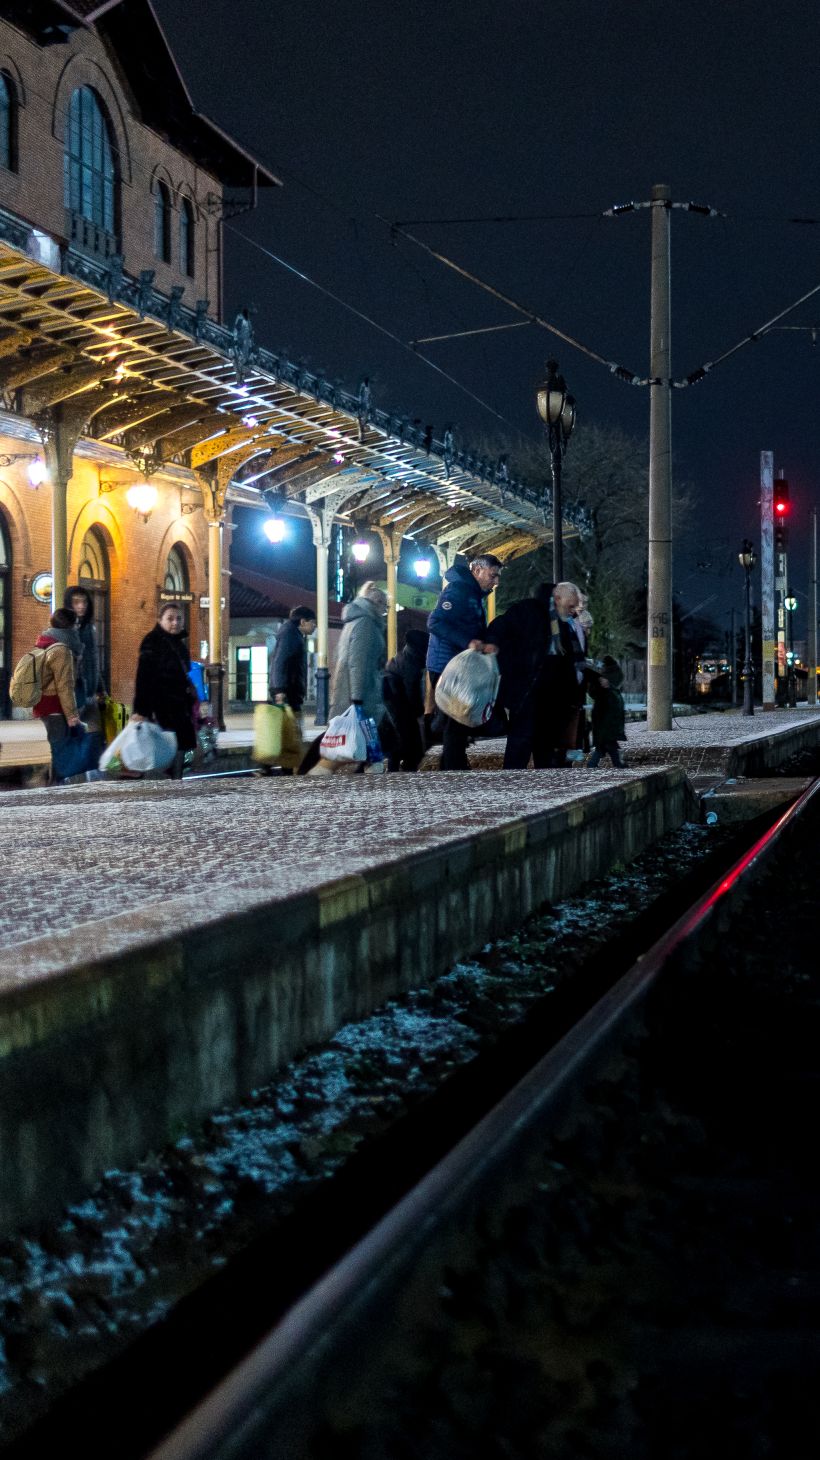 People wait on a train platform